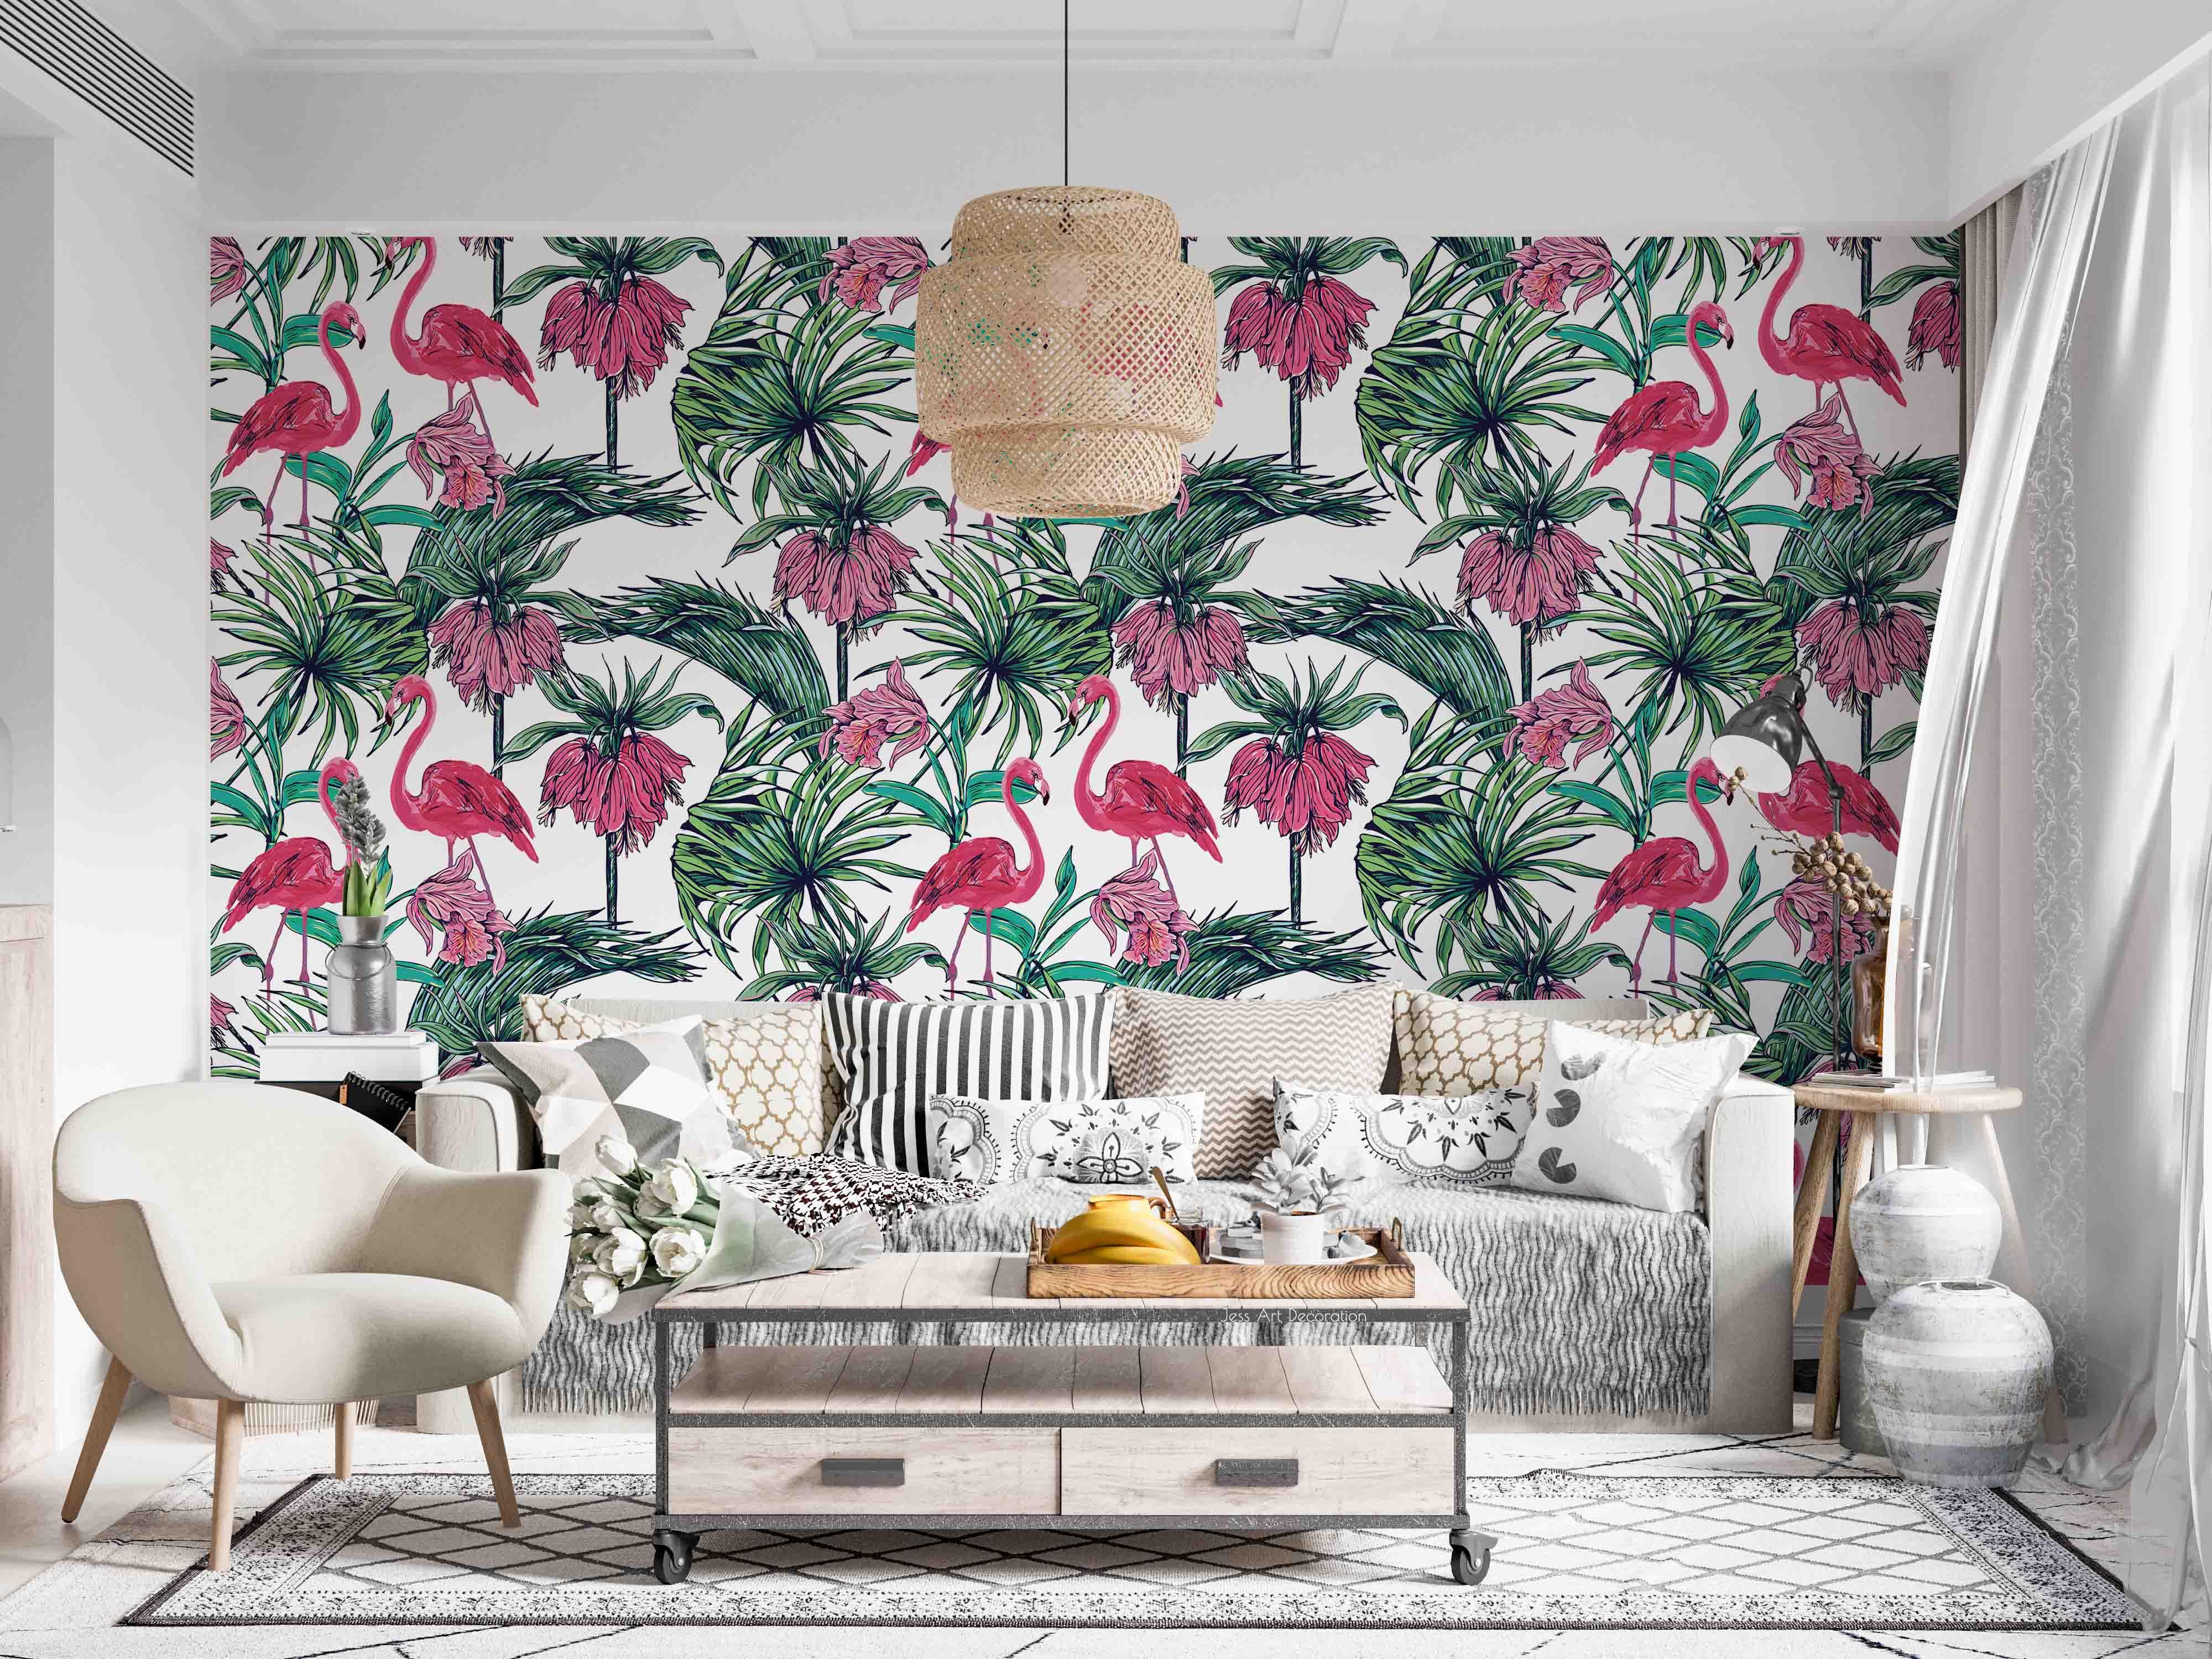 3D Vintage Plant Leaf Flamingo Pattern Wall Mural Wallpaper GD 3332- Jess Art Decoration